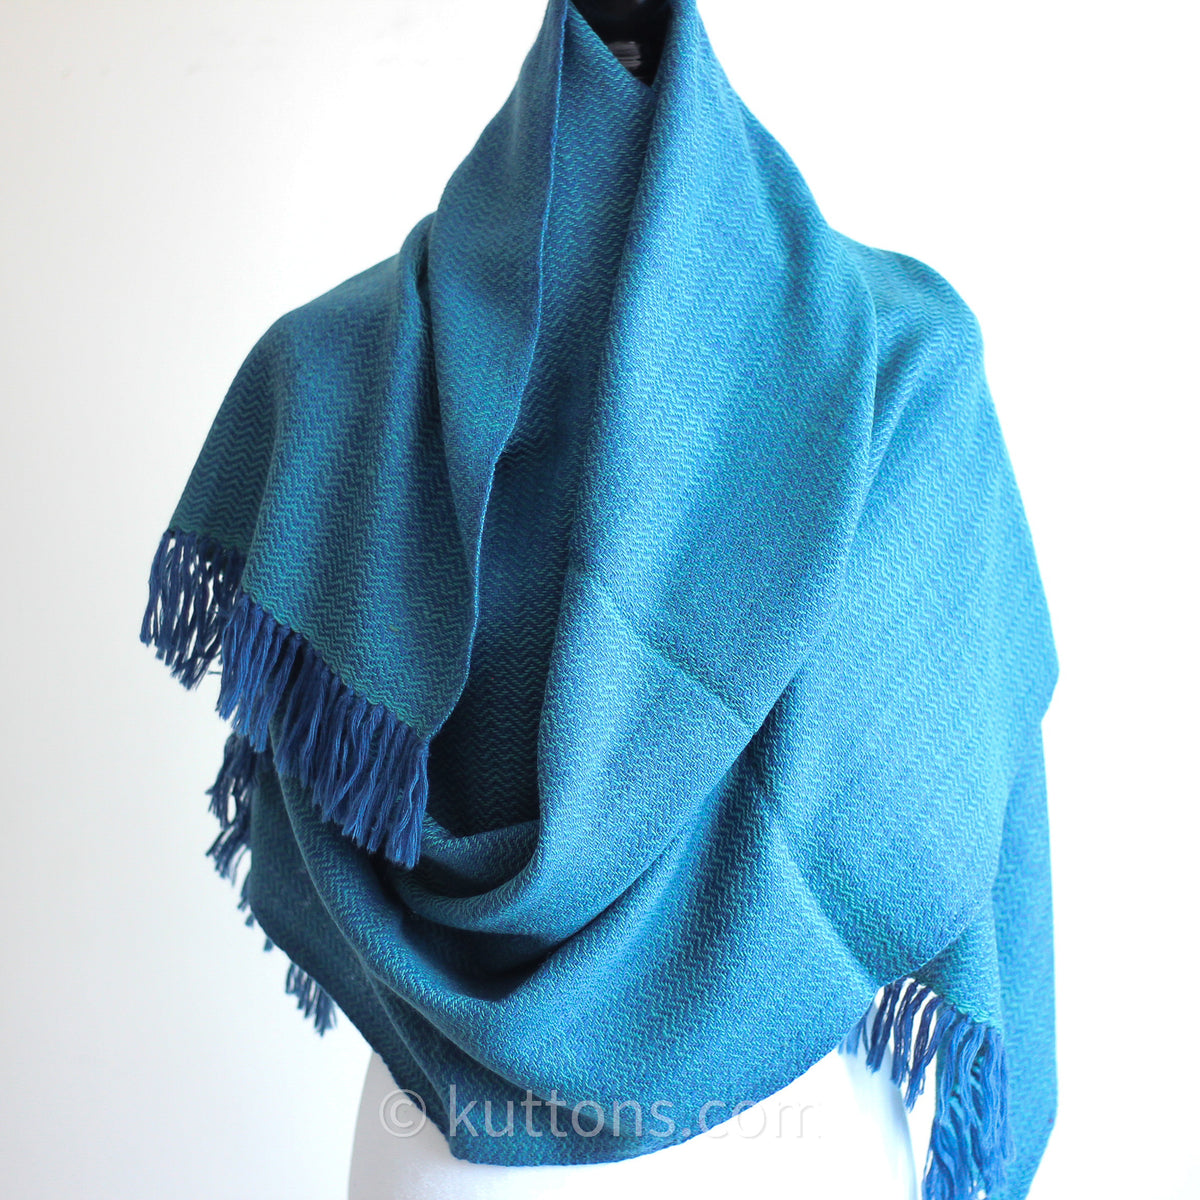 Handwoven Merino & Himalayan Woolen Shawl Wrap - Naturally Dyed with Indigo & Tesu Flowers | Blue-Green, 23.5x84"